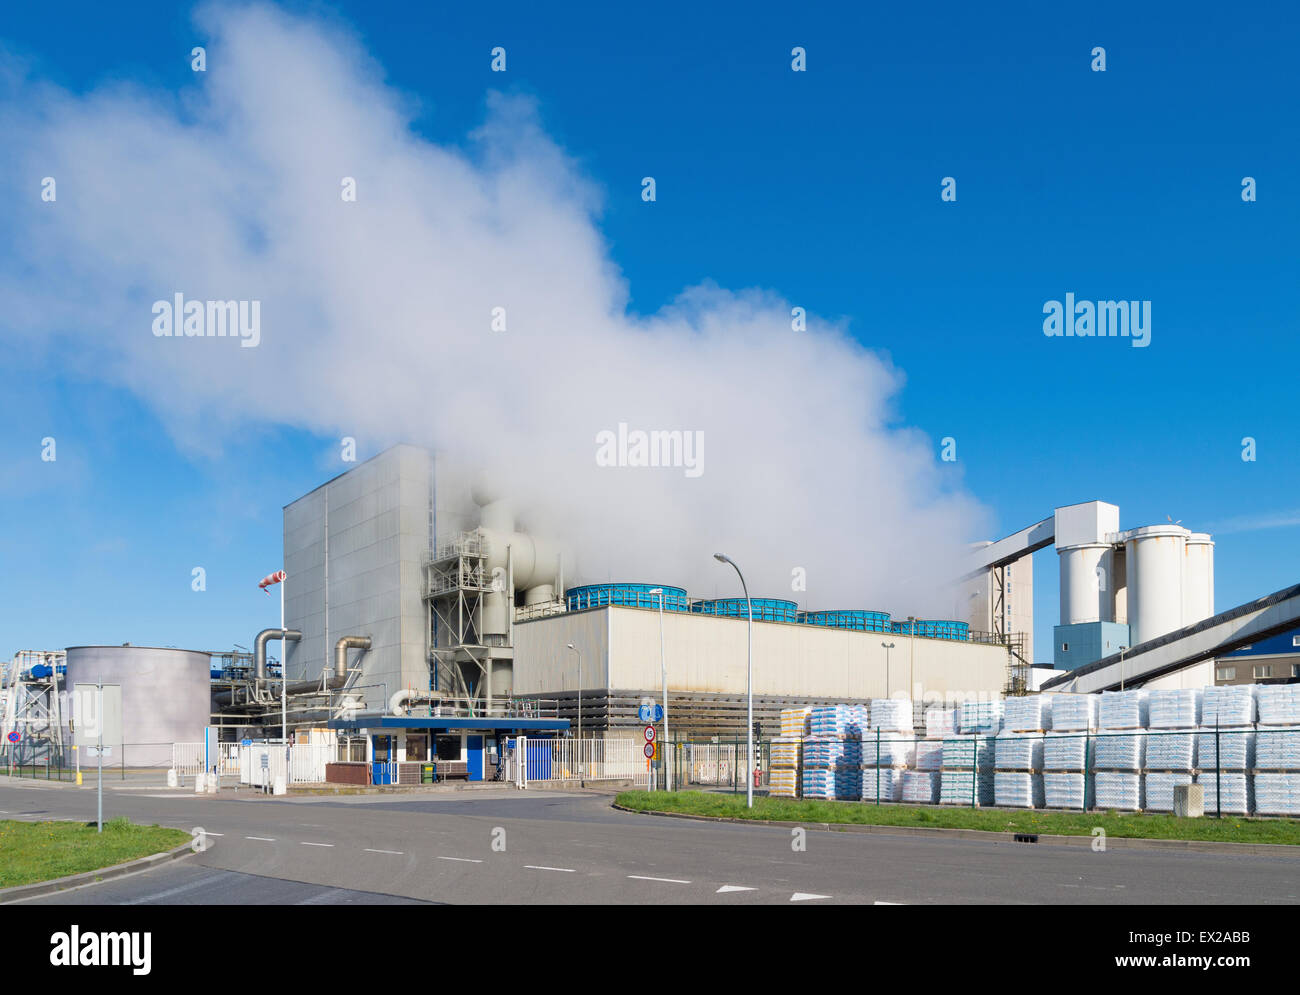 evaporating brine in a salt factory in hengelo, netherlands Stock Photo